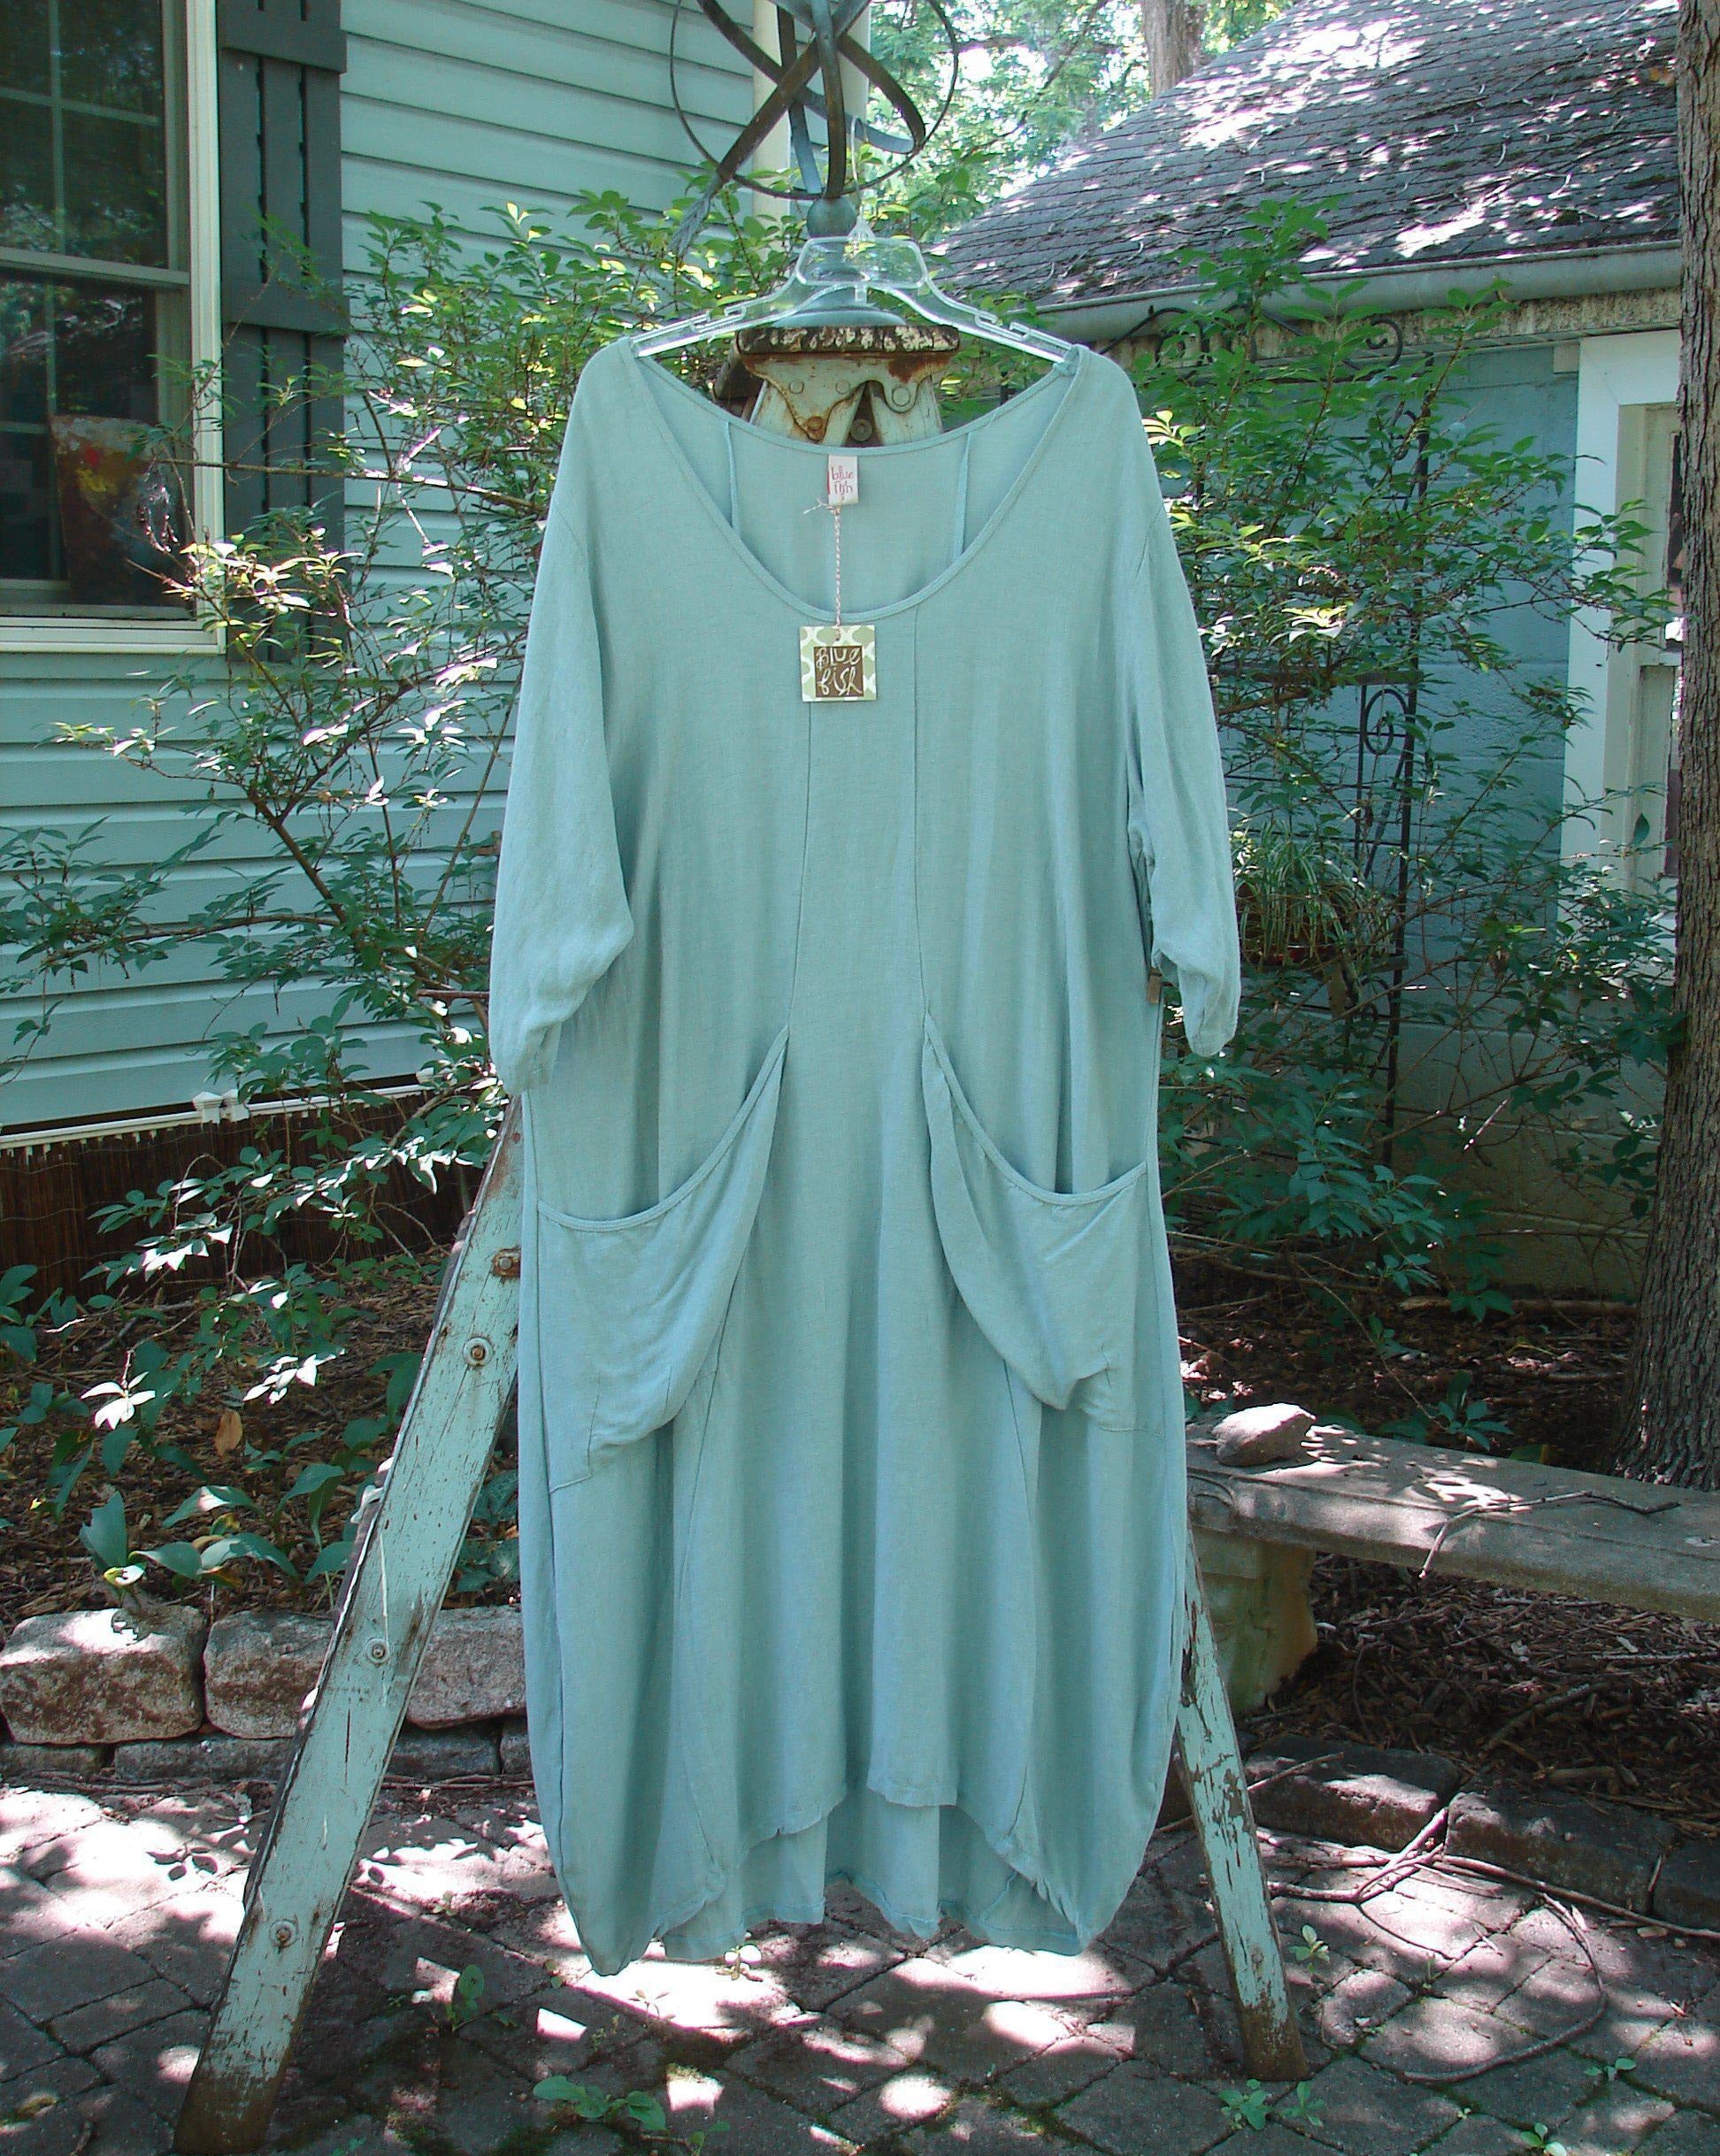 Barclay NWT Rayon Thostle Dress, unpainted dusty blue, size 1. Wide scoop neckline, hourglass shape, pegged hemline, drop front pockets.